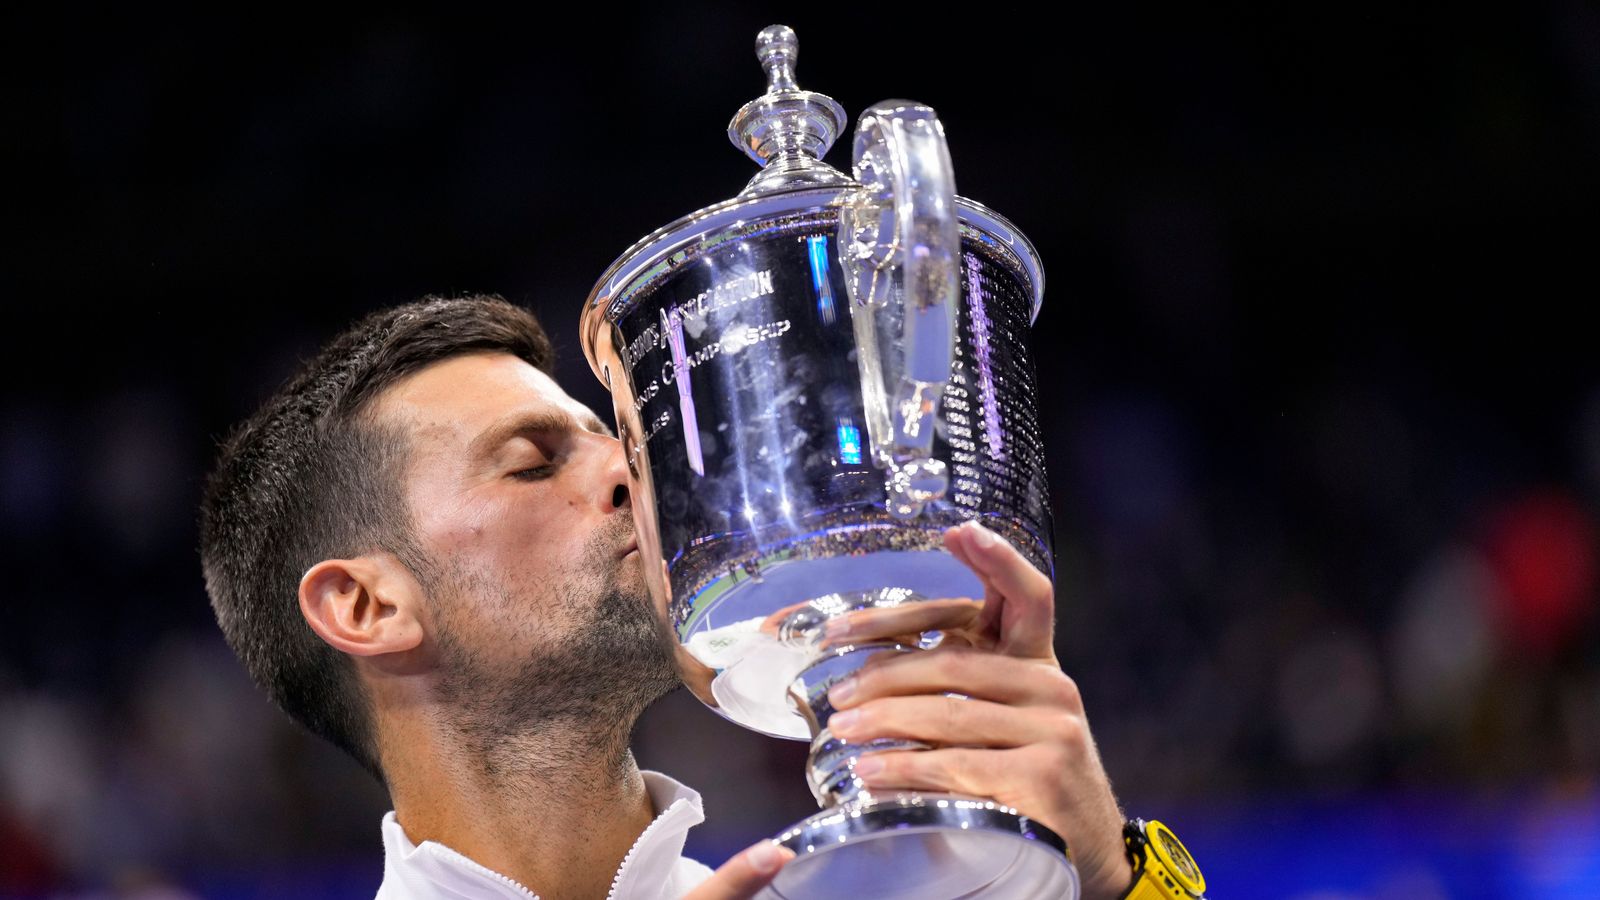 Novak Djokovic will win ‘plenty more’ Grand Slams says Tim Henman after Serbian wins US Open title | Tennis News